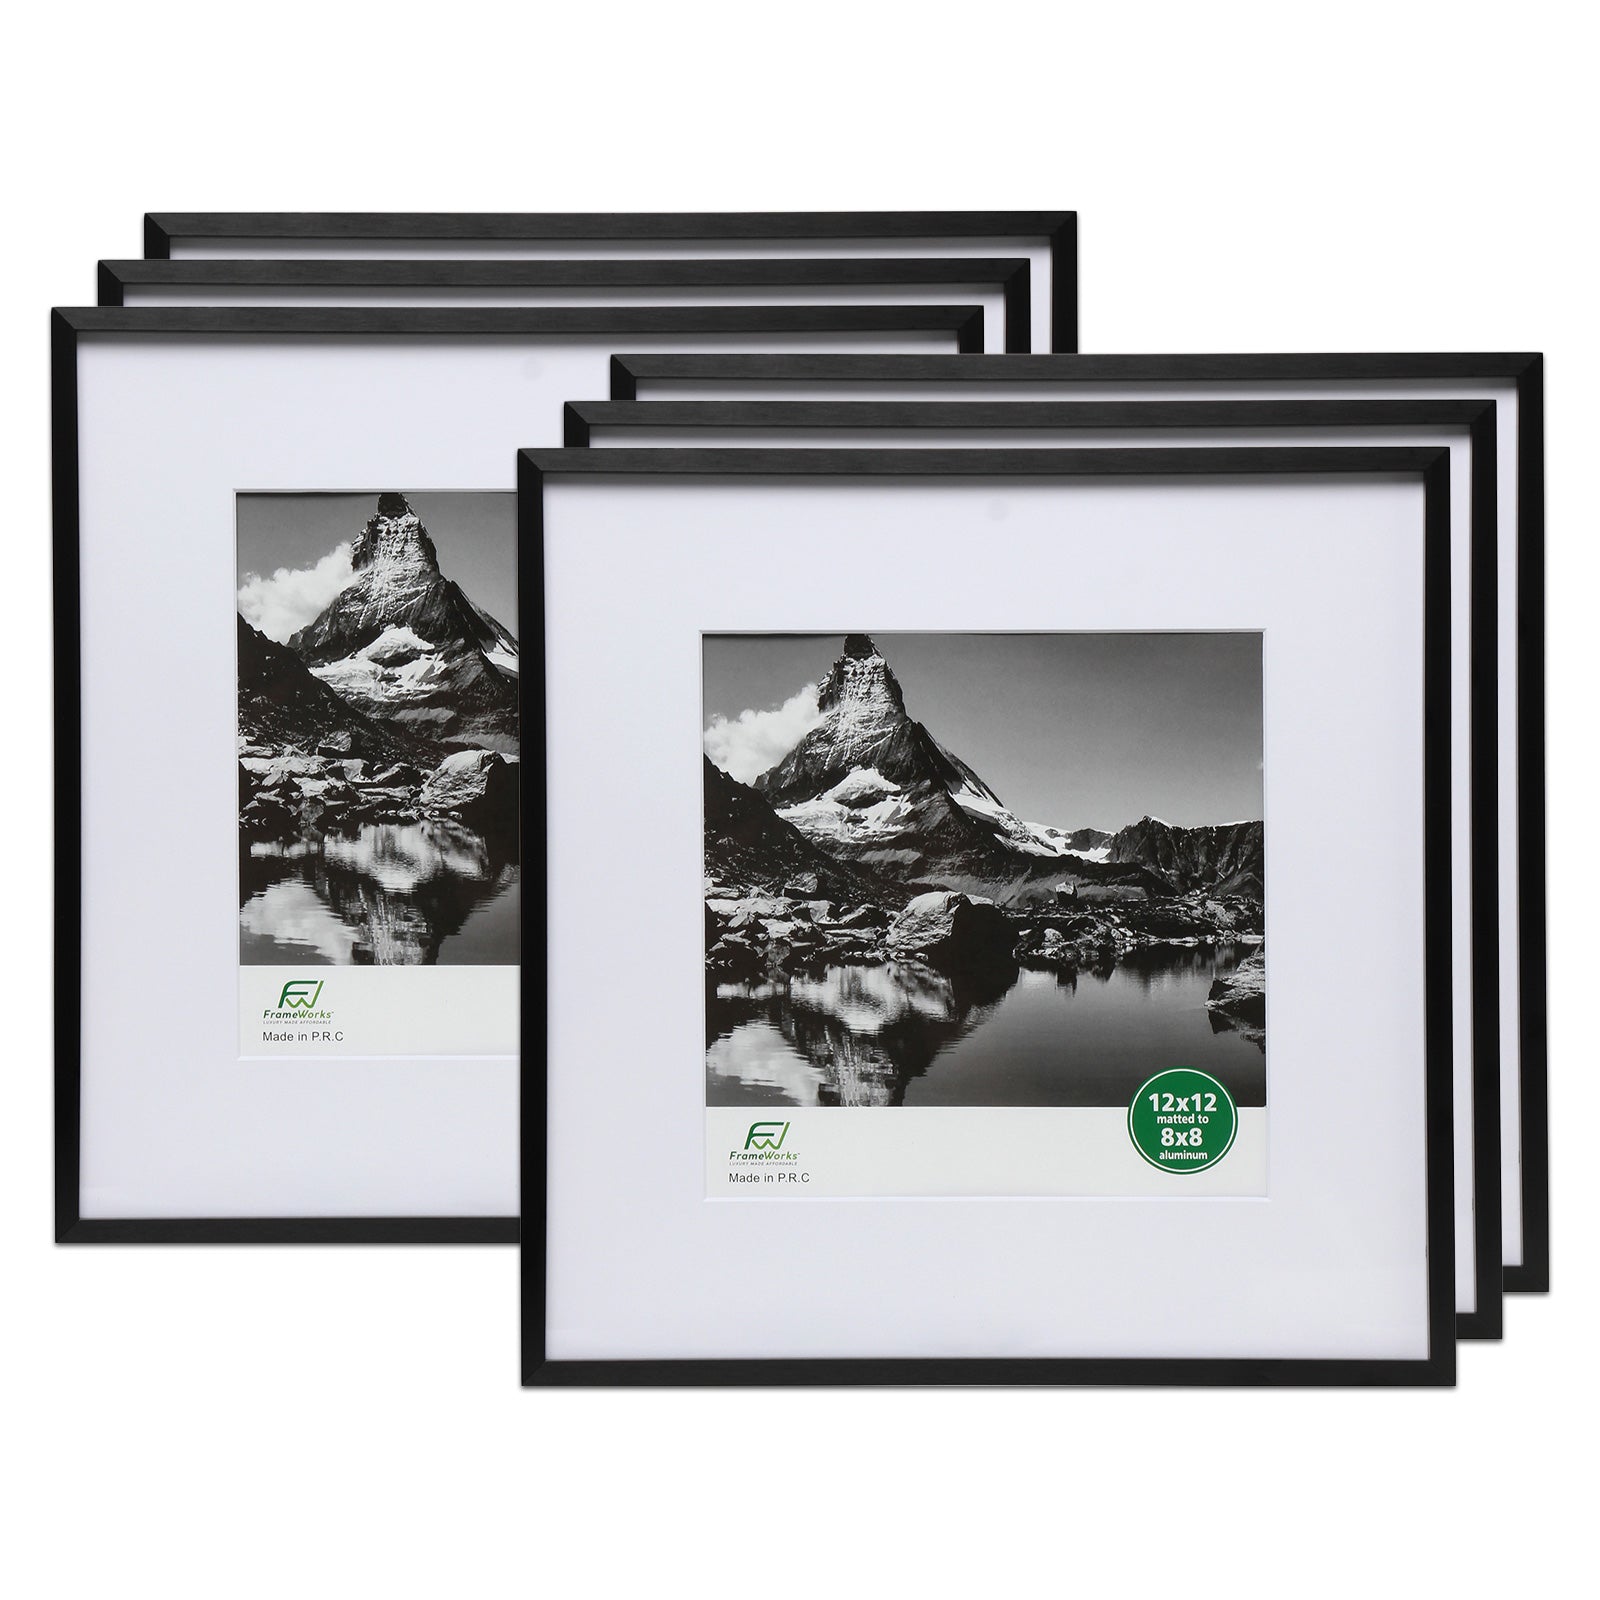 URBAN Flat Black Scrapbook 12x12 frame by MCS® - Picture Frames